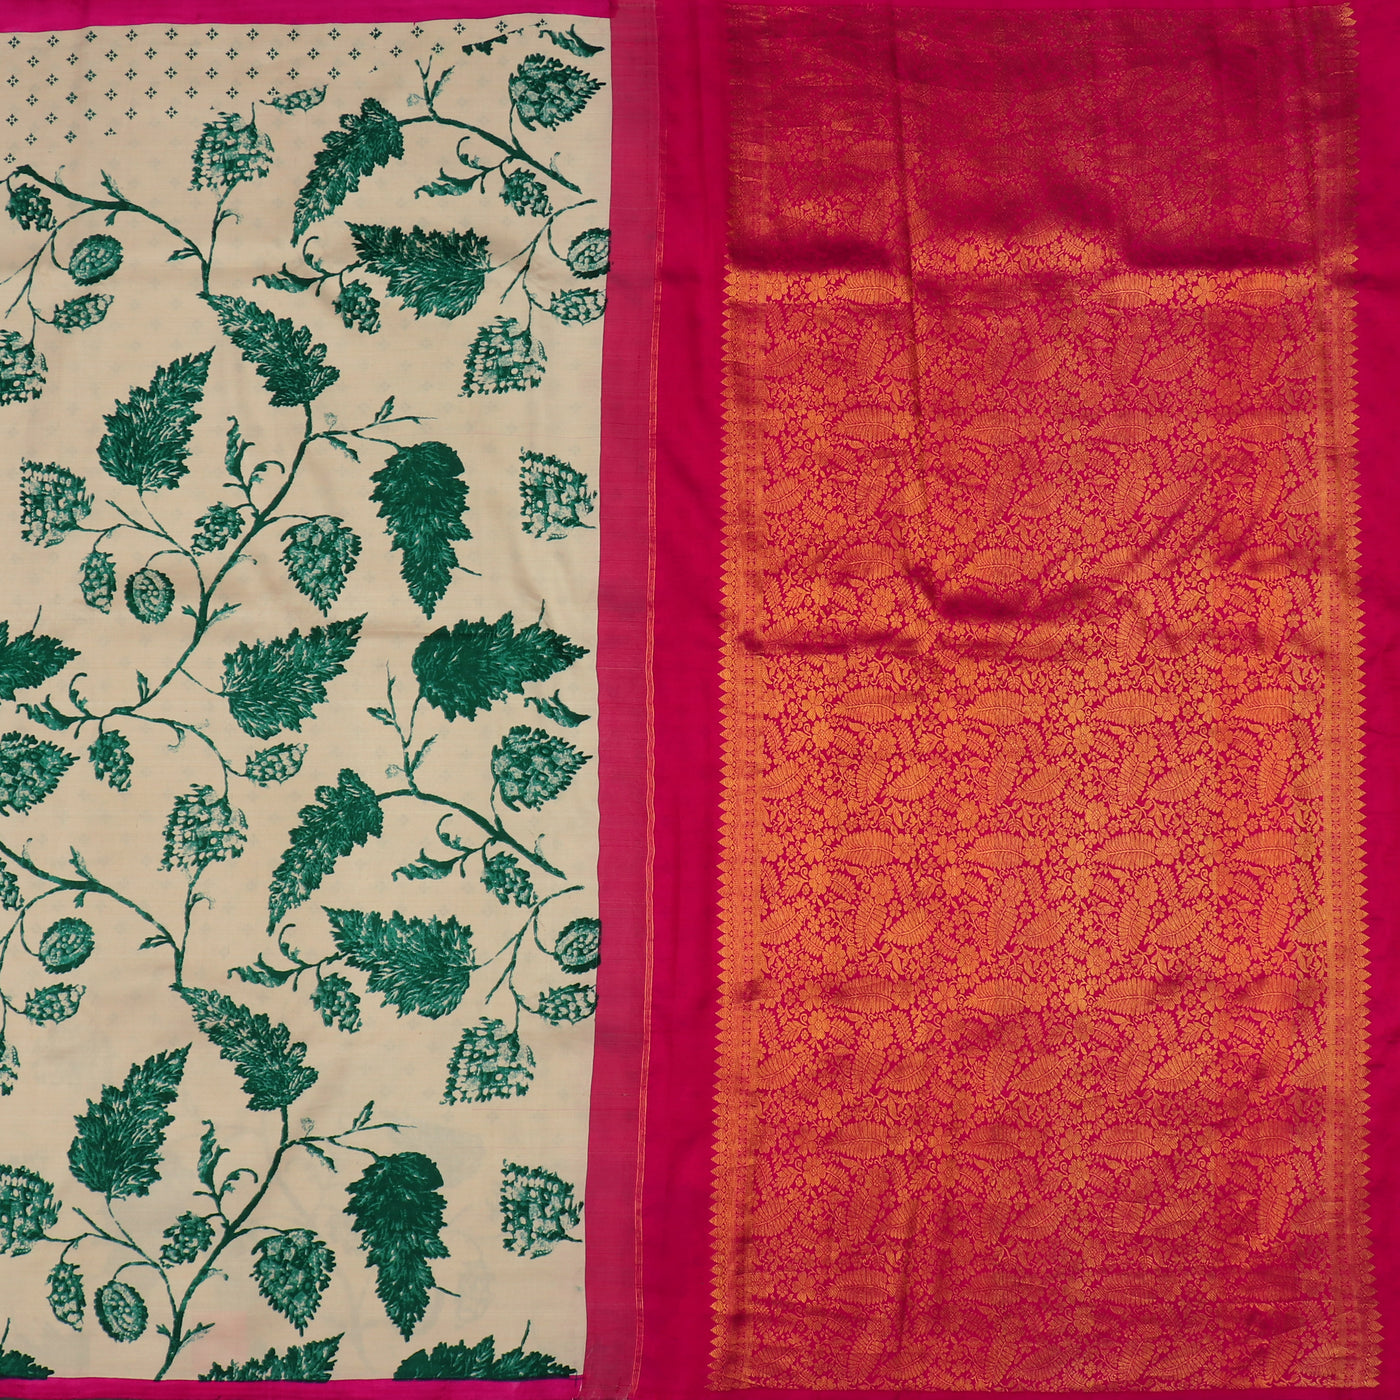 Off White Printed Kanchi Silk Saree with Leaf Printed Design